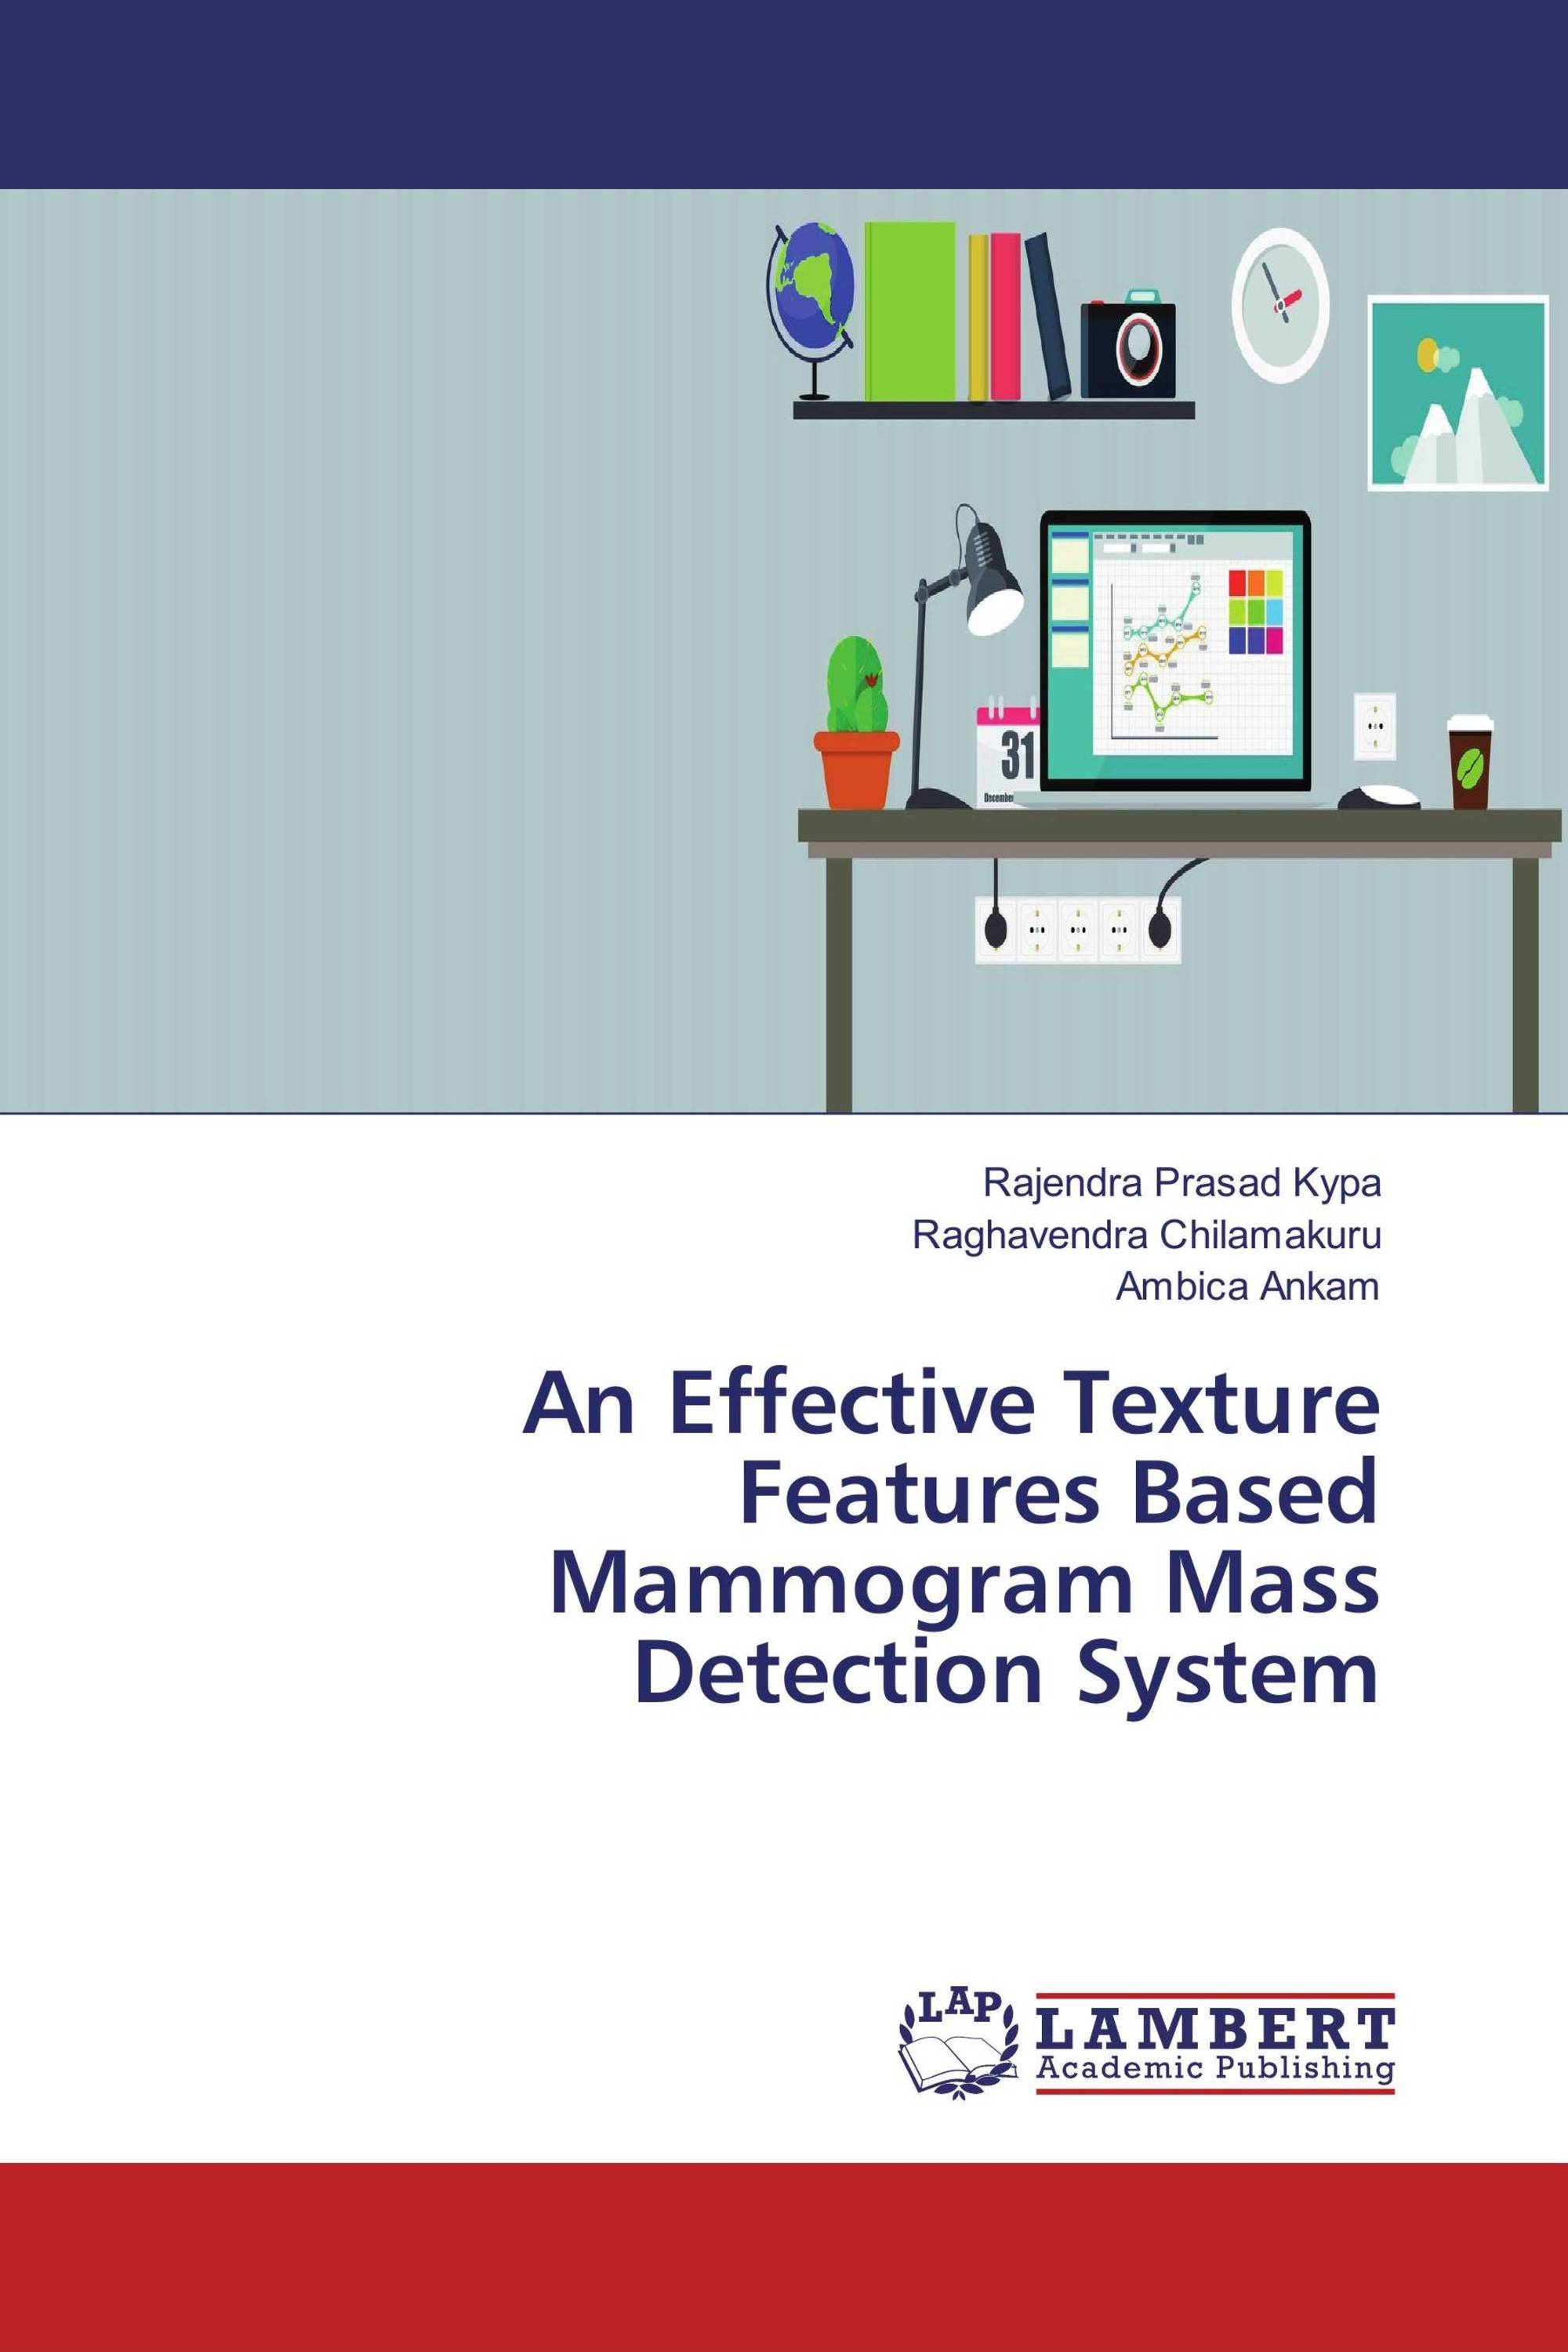 An Effective Texture Feature Based Mammogram Mass Detection System